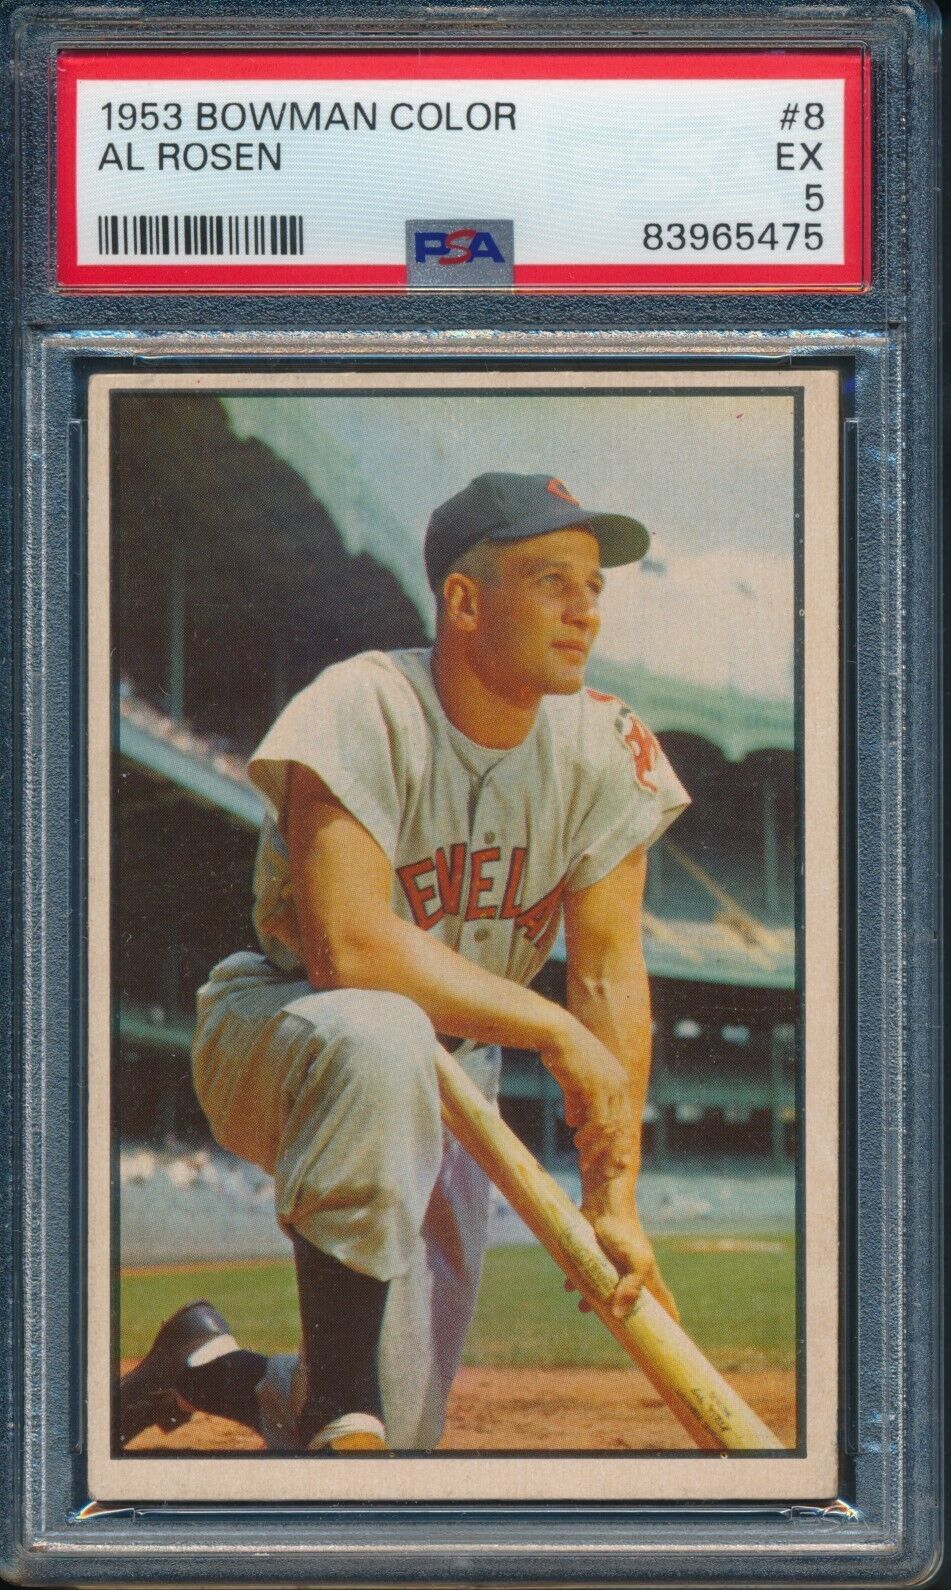 1953 Bowman Color Baseball Al Rosen #8 PSA 5 INDIANS EX